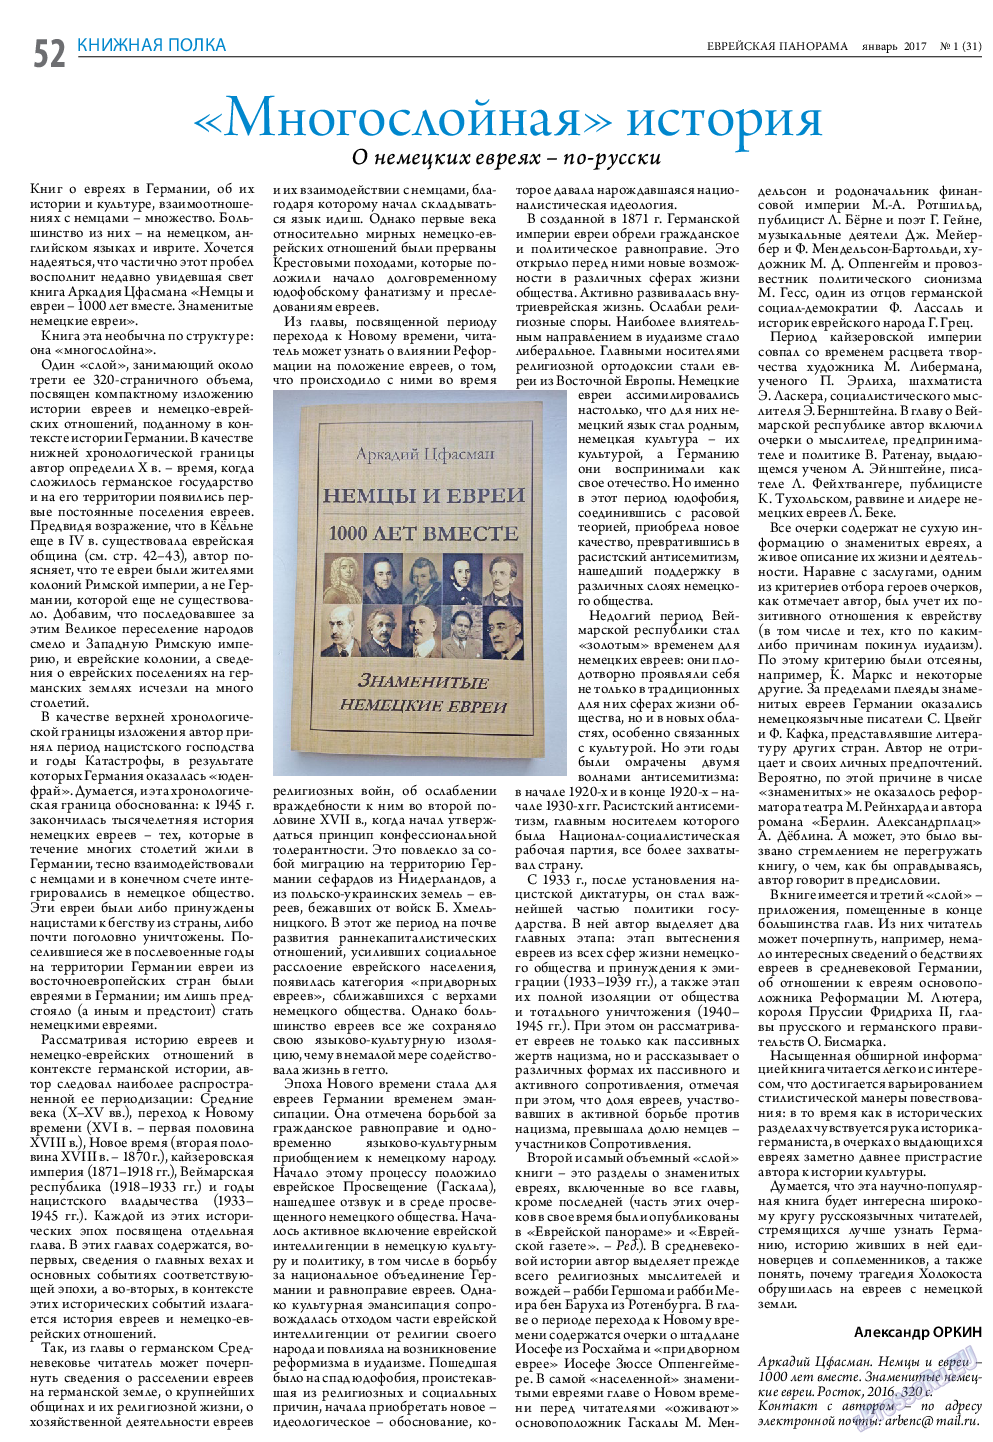 Еврейская панорама, газета. 2017 №1 стр.52